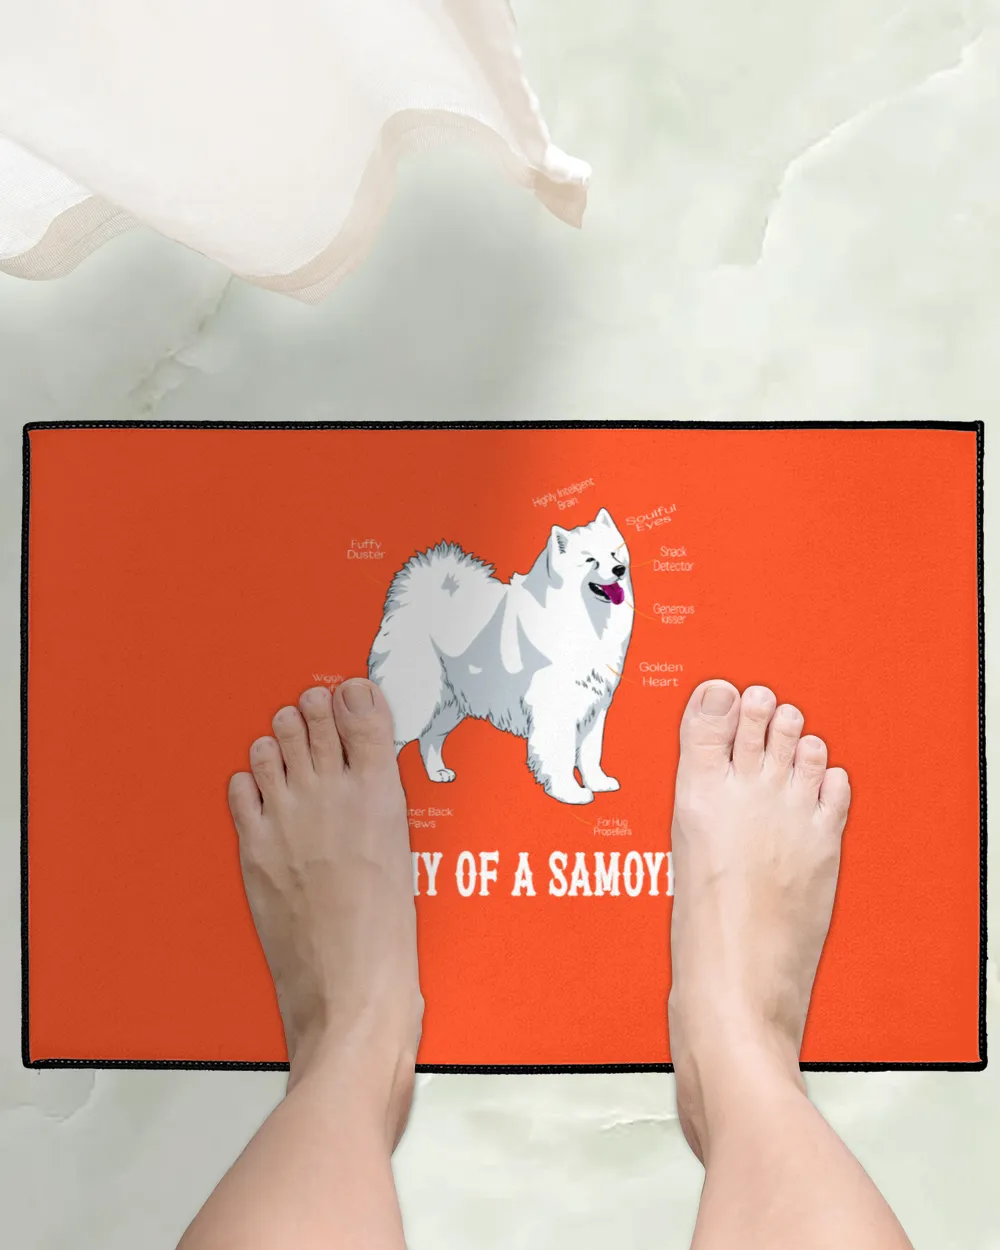 Samoyed Dog Anatomy